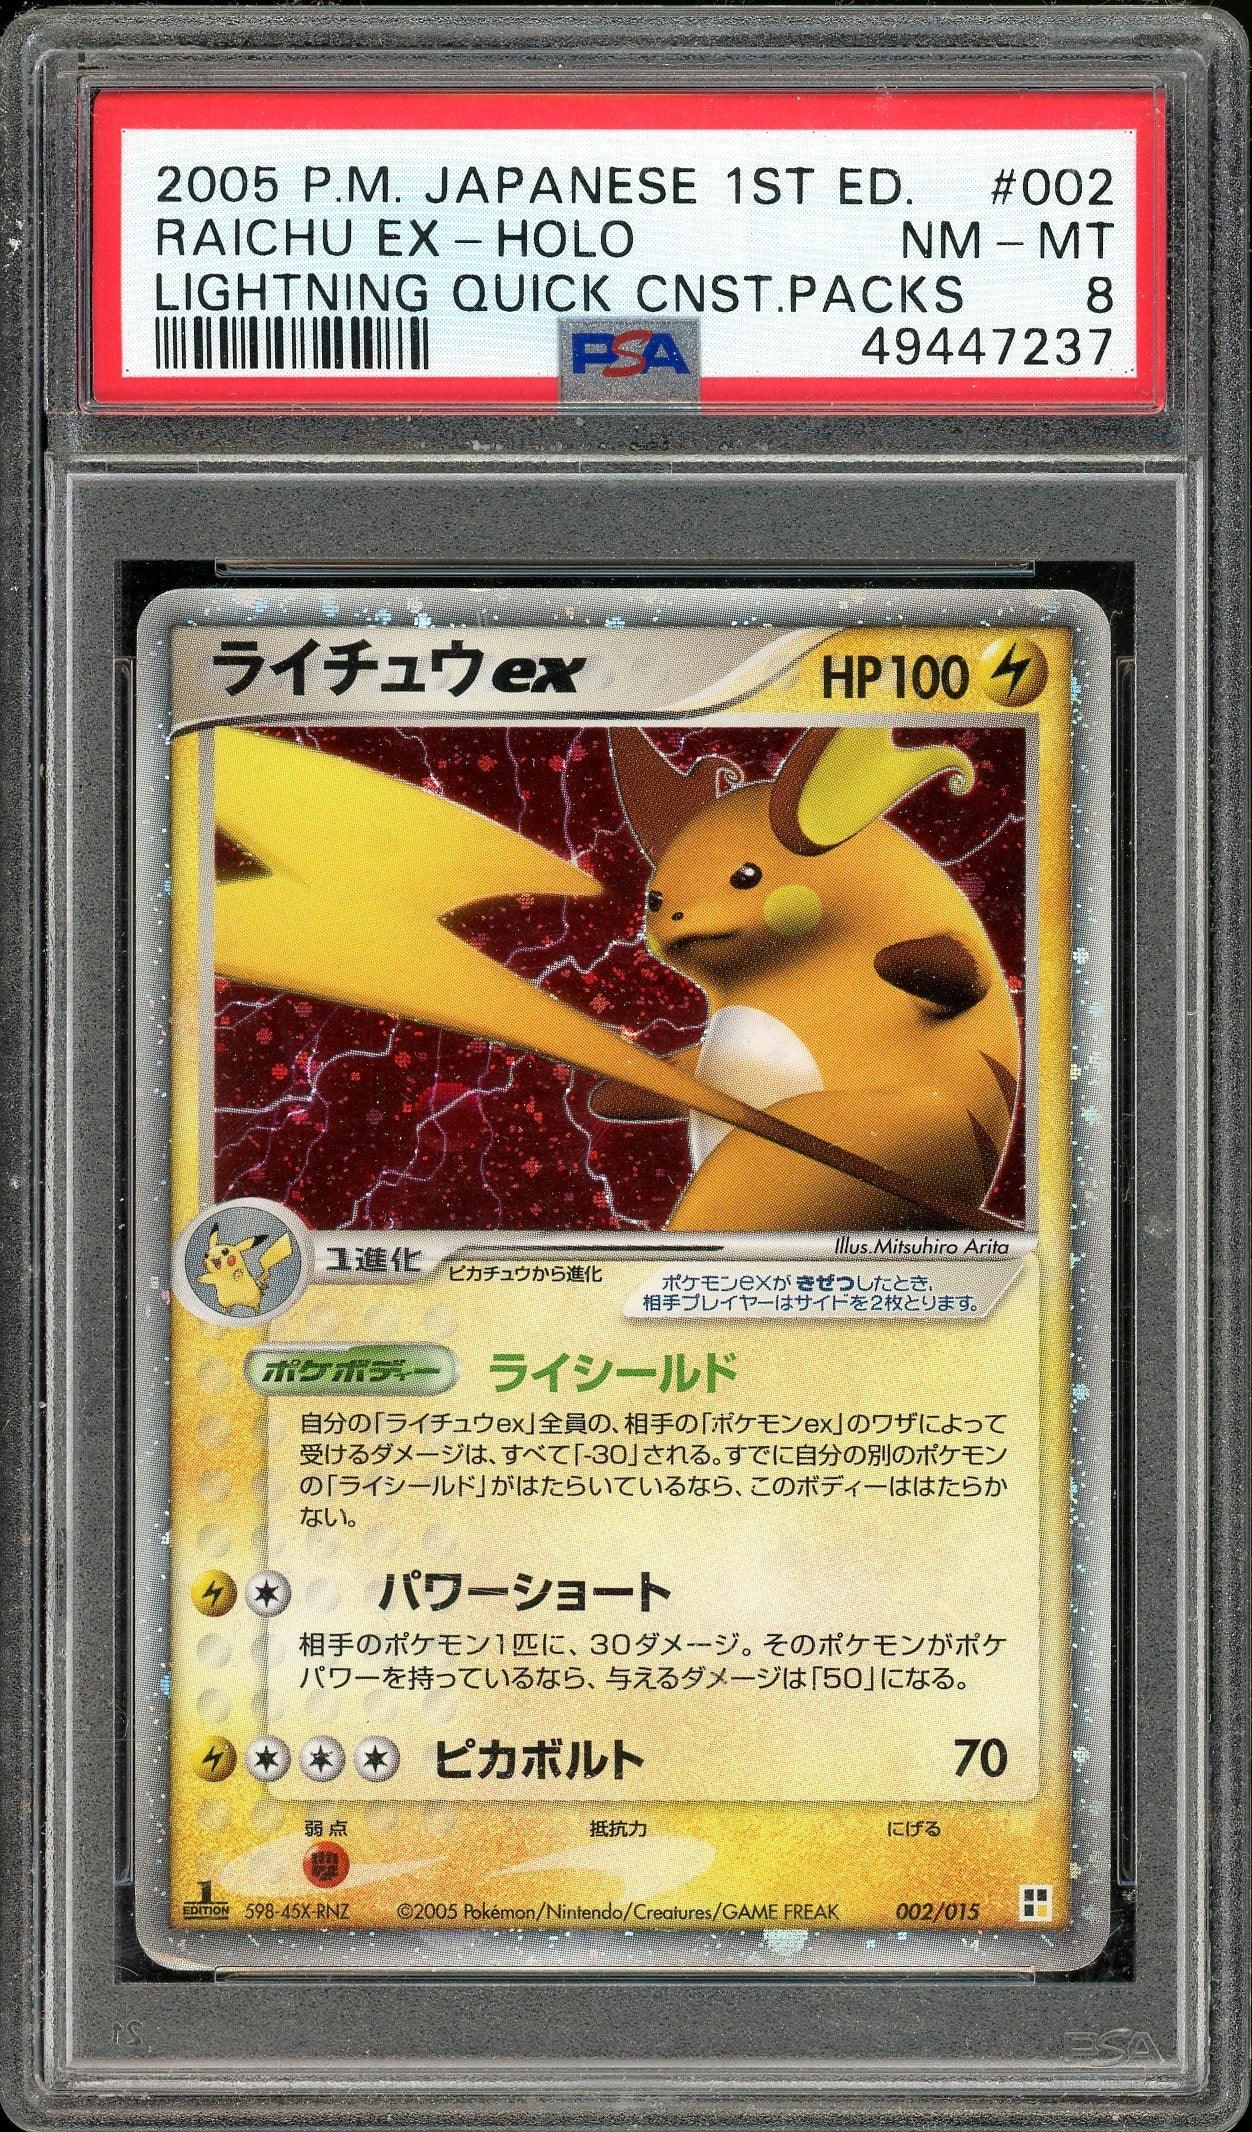 Pokemon: Raichu ex Japanese Lightning Quick Pack 002/015 PSA 8